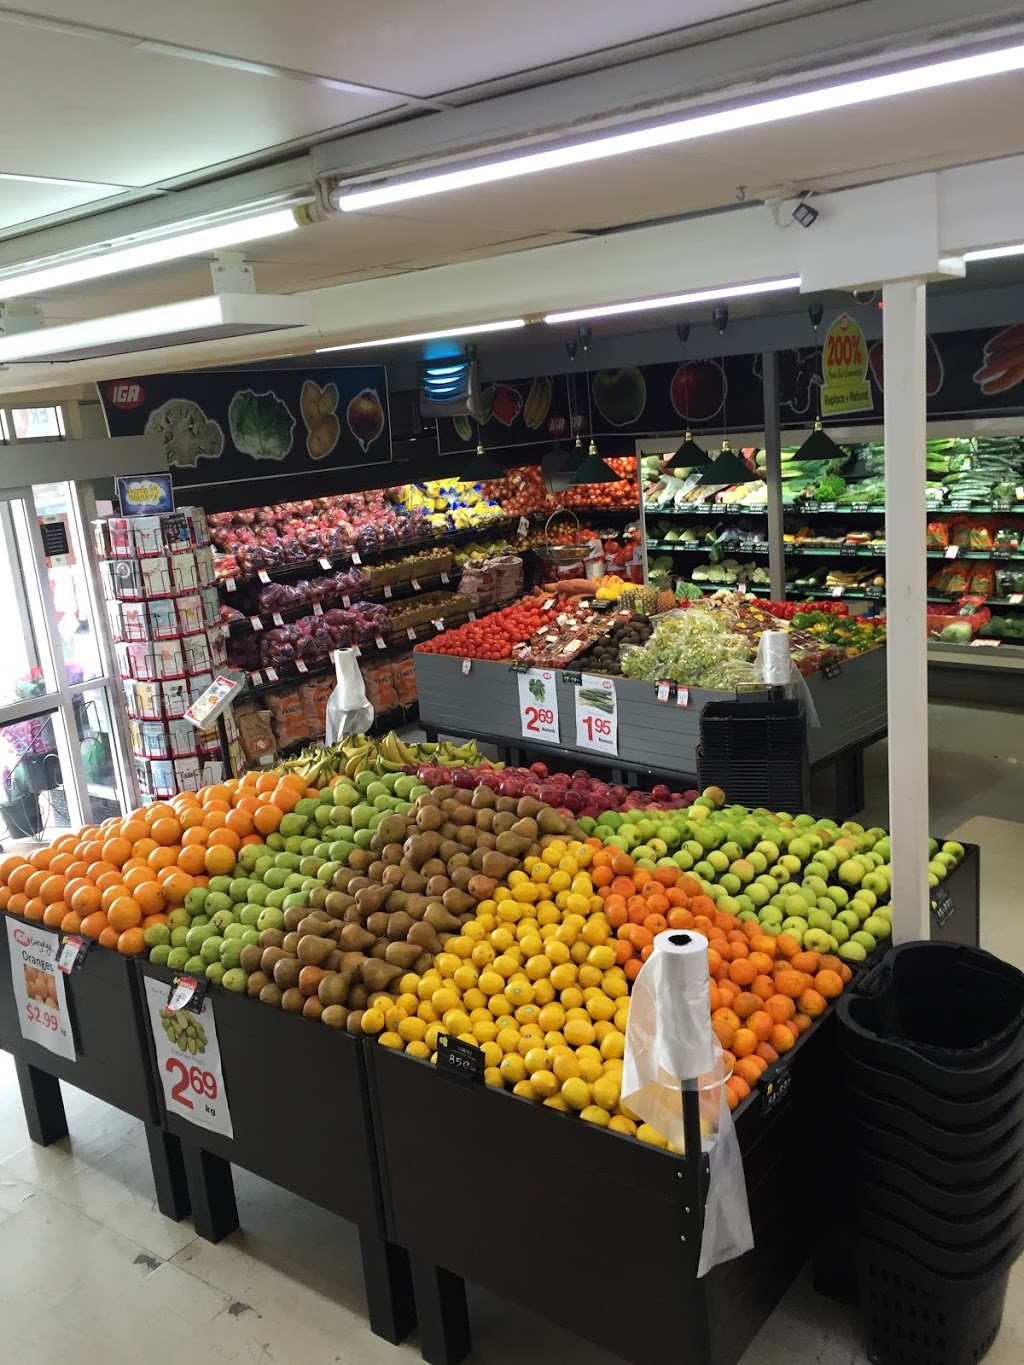 Exeter IGA Everyday | supermarket | 118 Main Rd, Exeter TAS 7275, Australia | 0363944117 OR +61 3 6394 4117